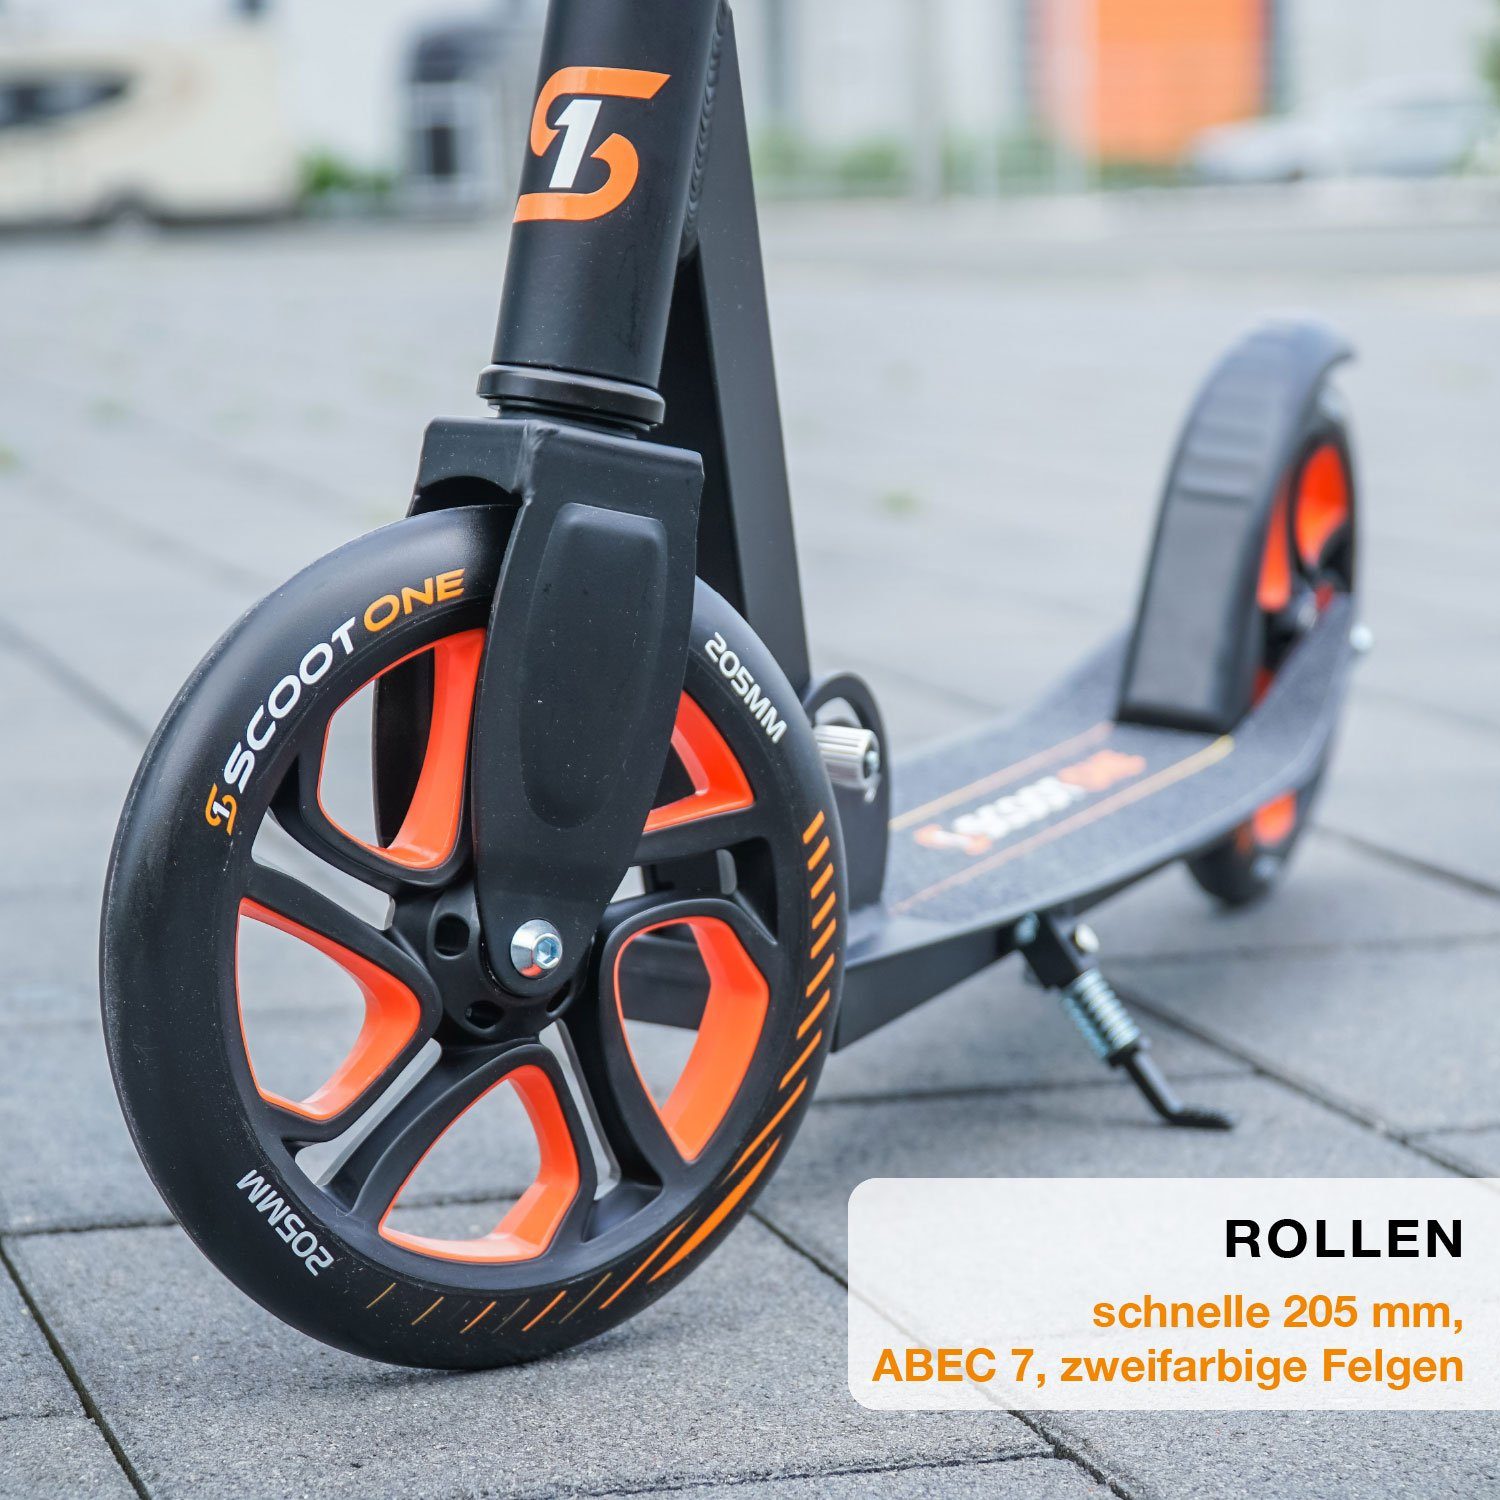 Scoot One Tretroller – Roller, Höhenverstellbarer Cityroller Kickroller 205mm klappbar S2, Aluminium orange